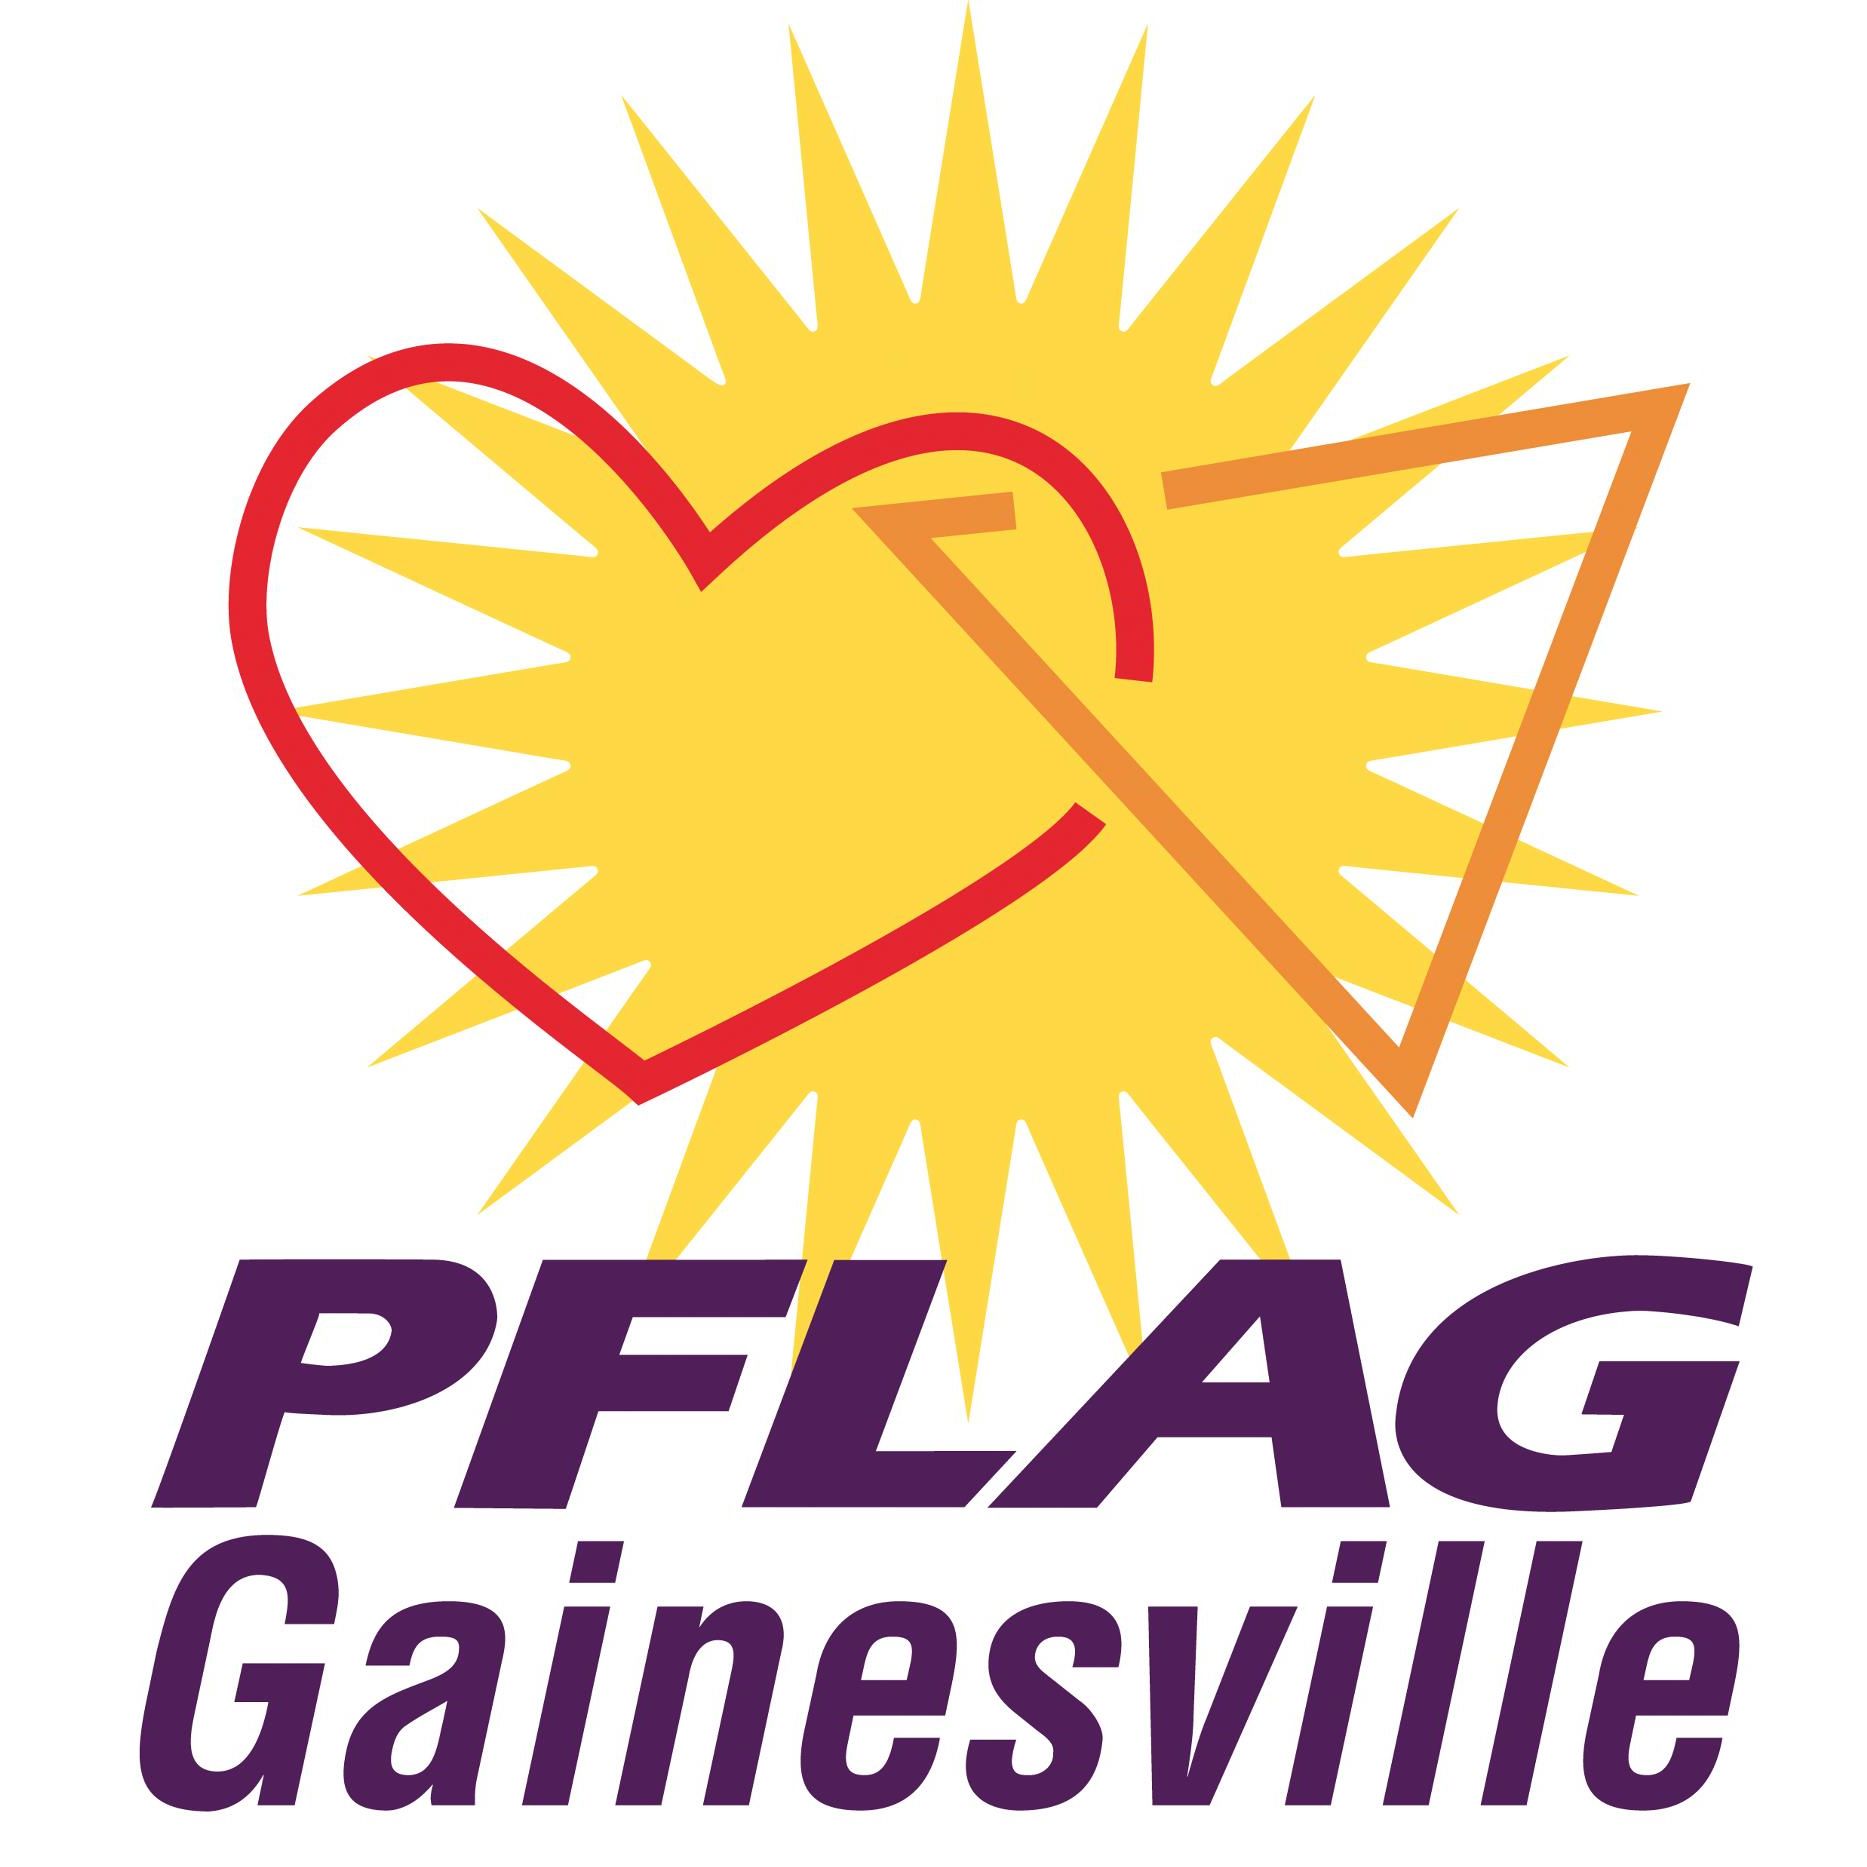 LGBTQ Organization in Miami Florida - PFLAG Gainesville